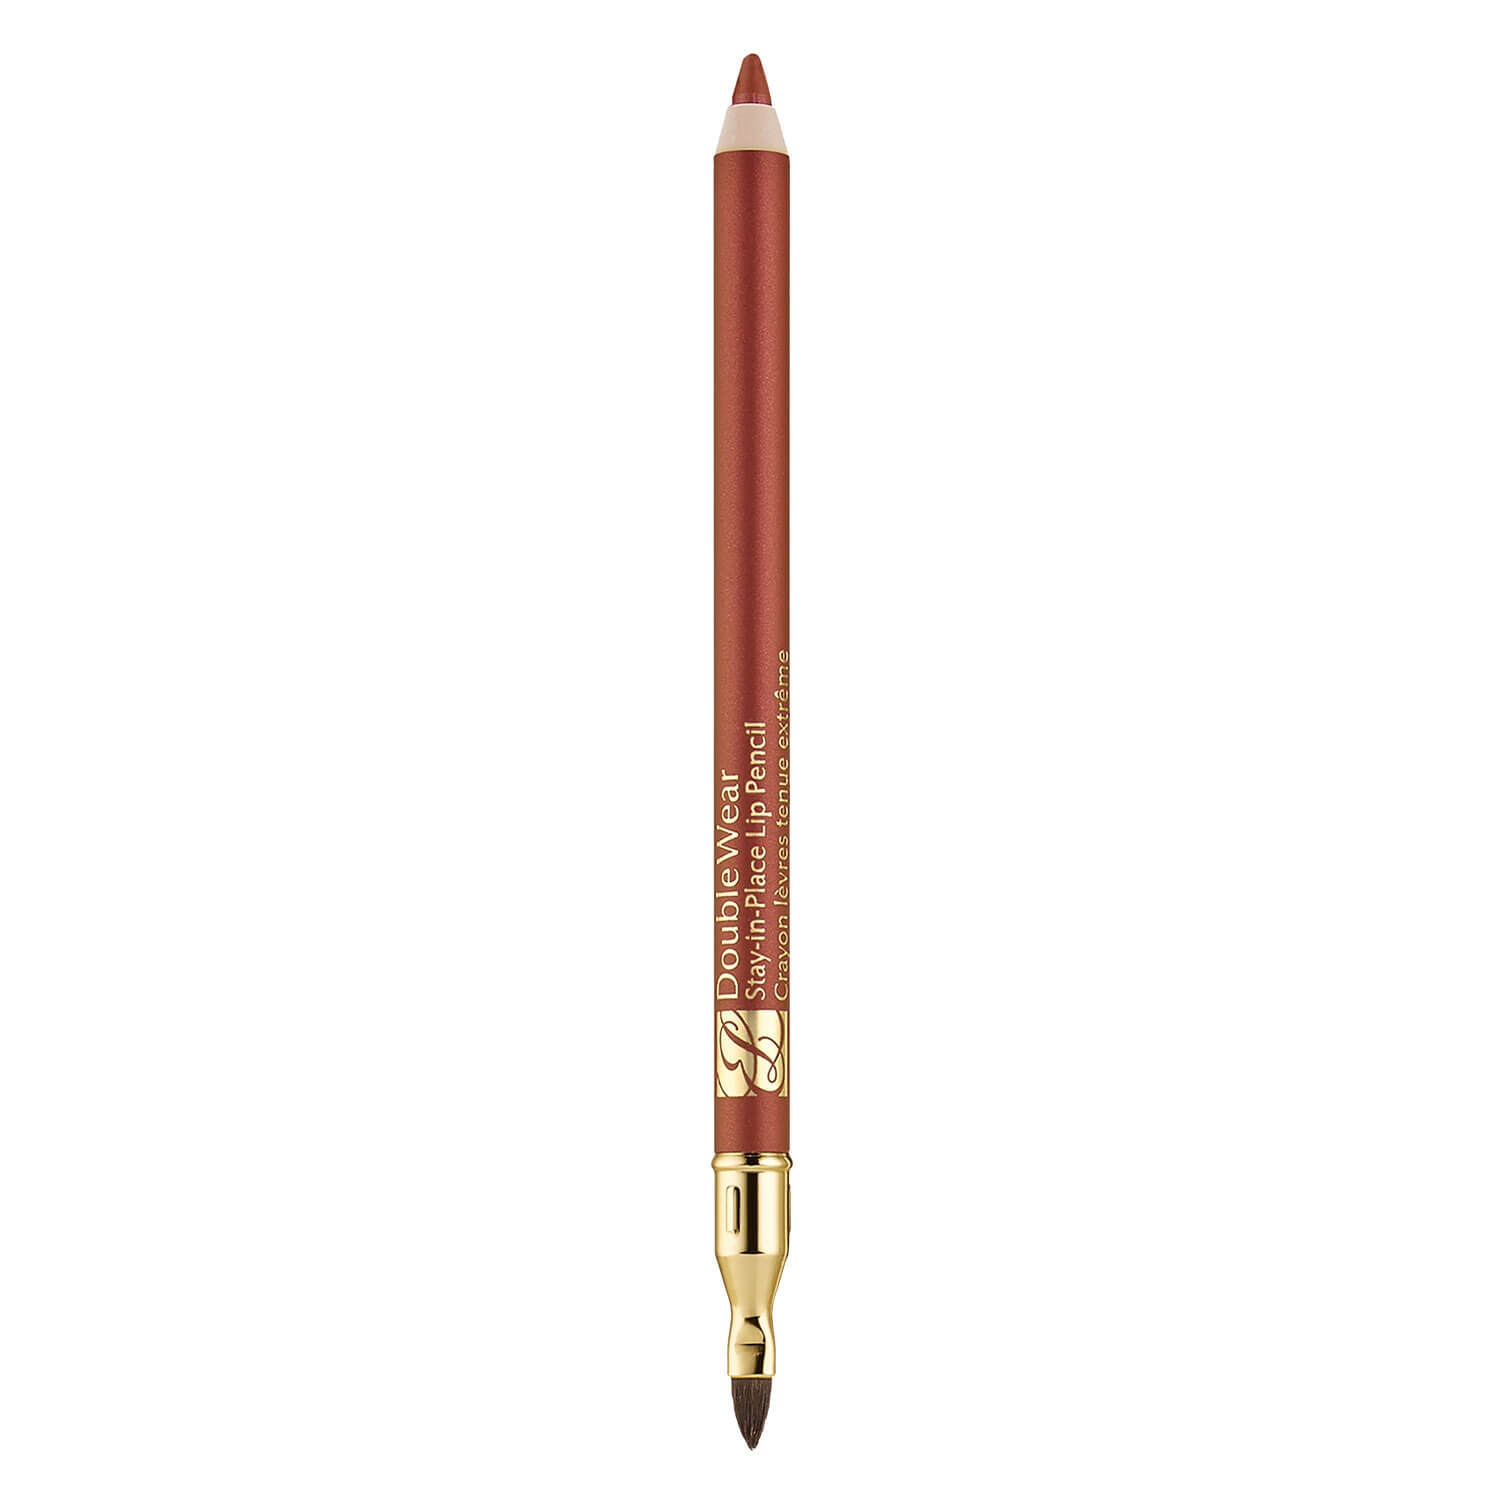 Produktbild von Double Wear - Stay-in-Place Lip Pencil Spice